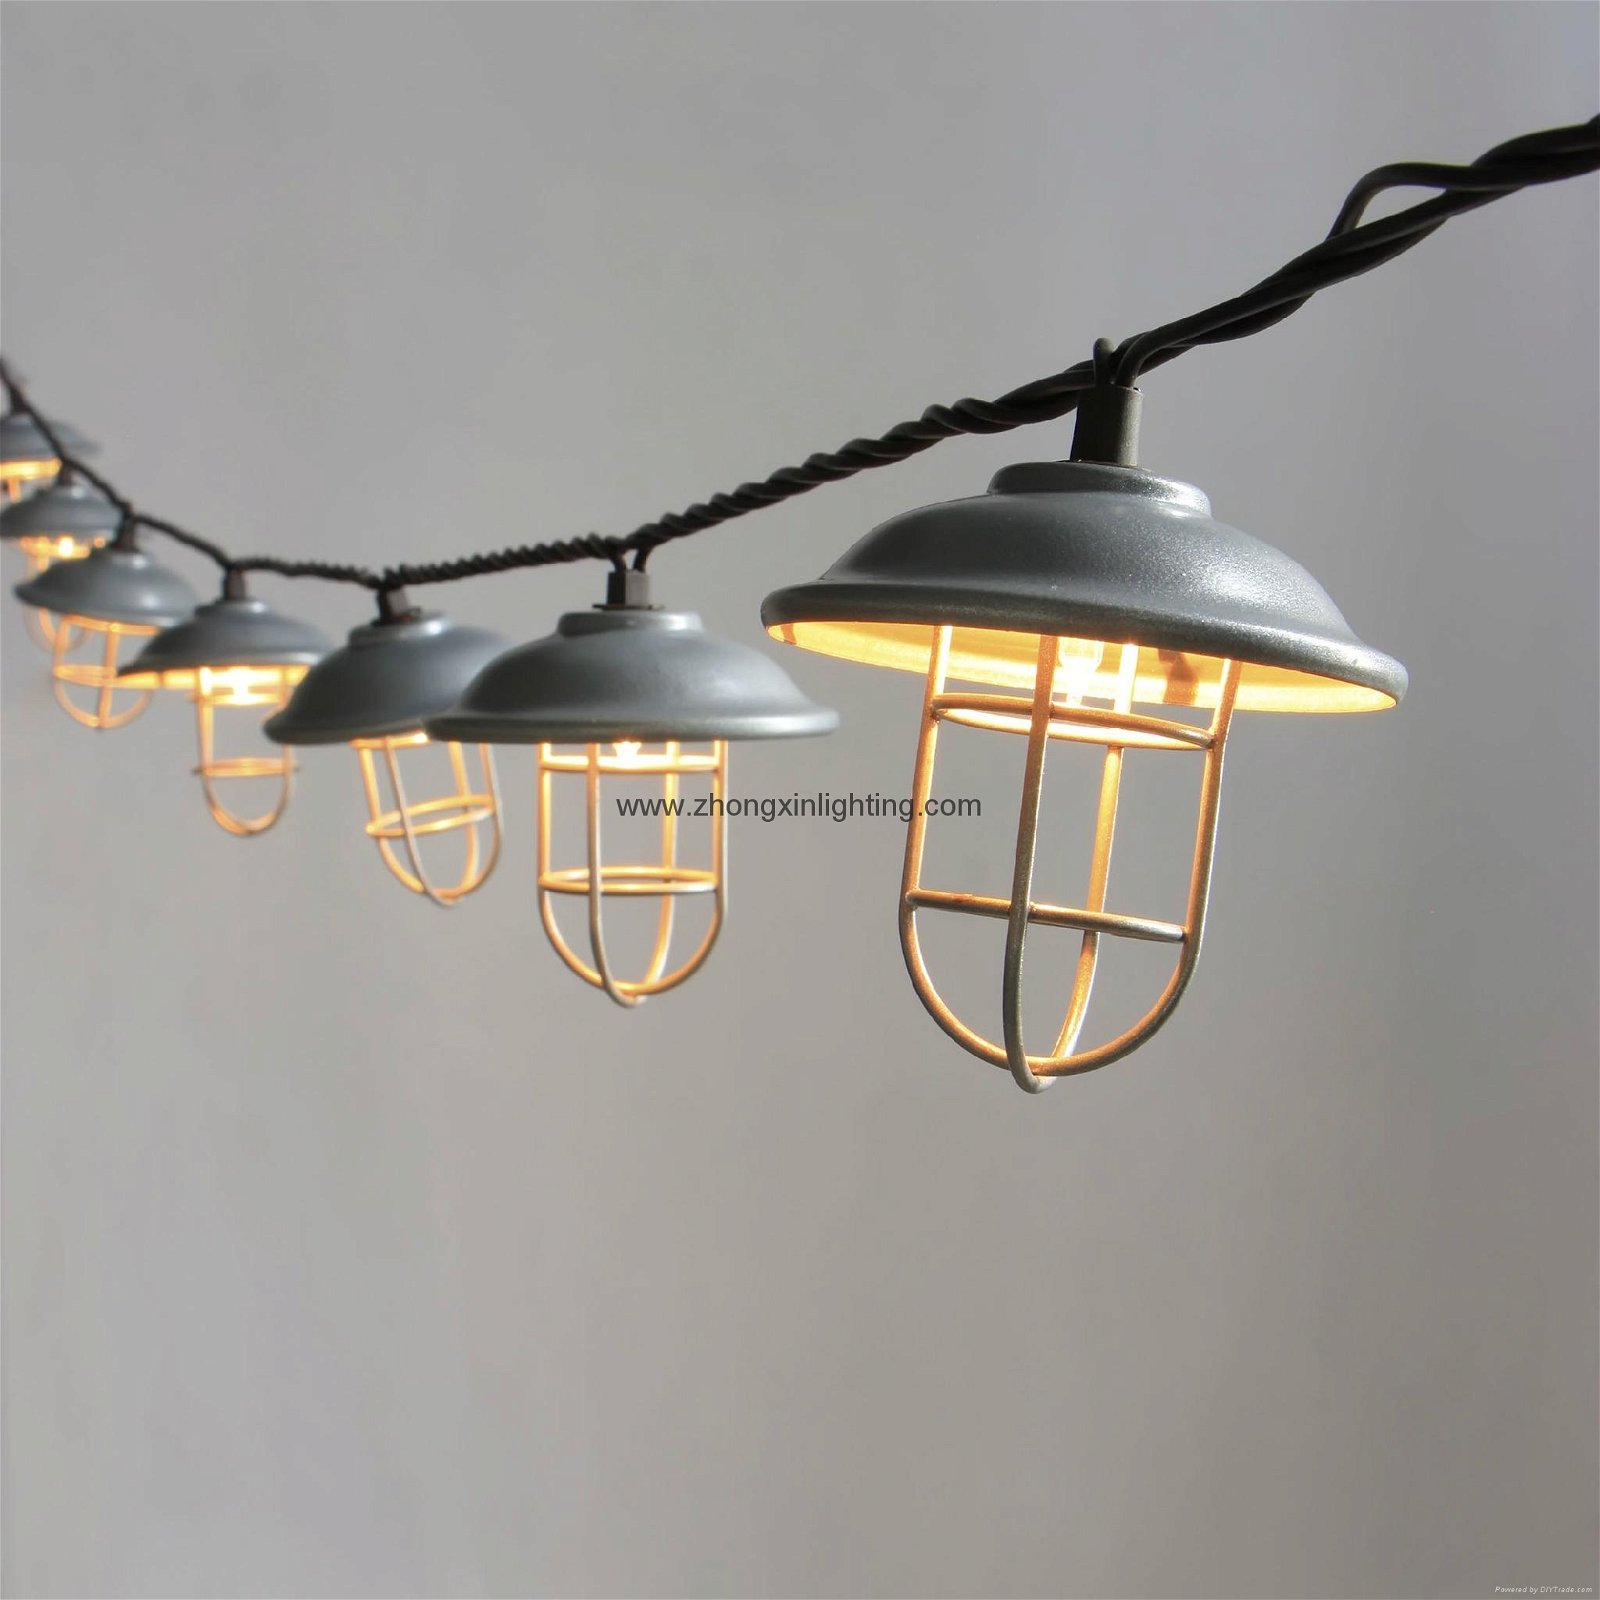 Garden String Light-Decorative Galvanized hood & wire cage string light 10ct 4